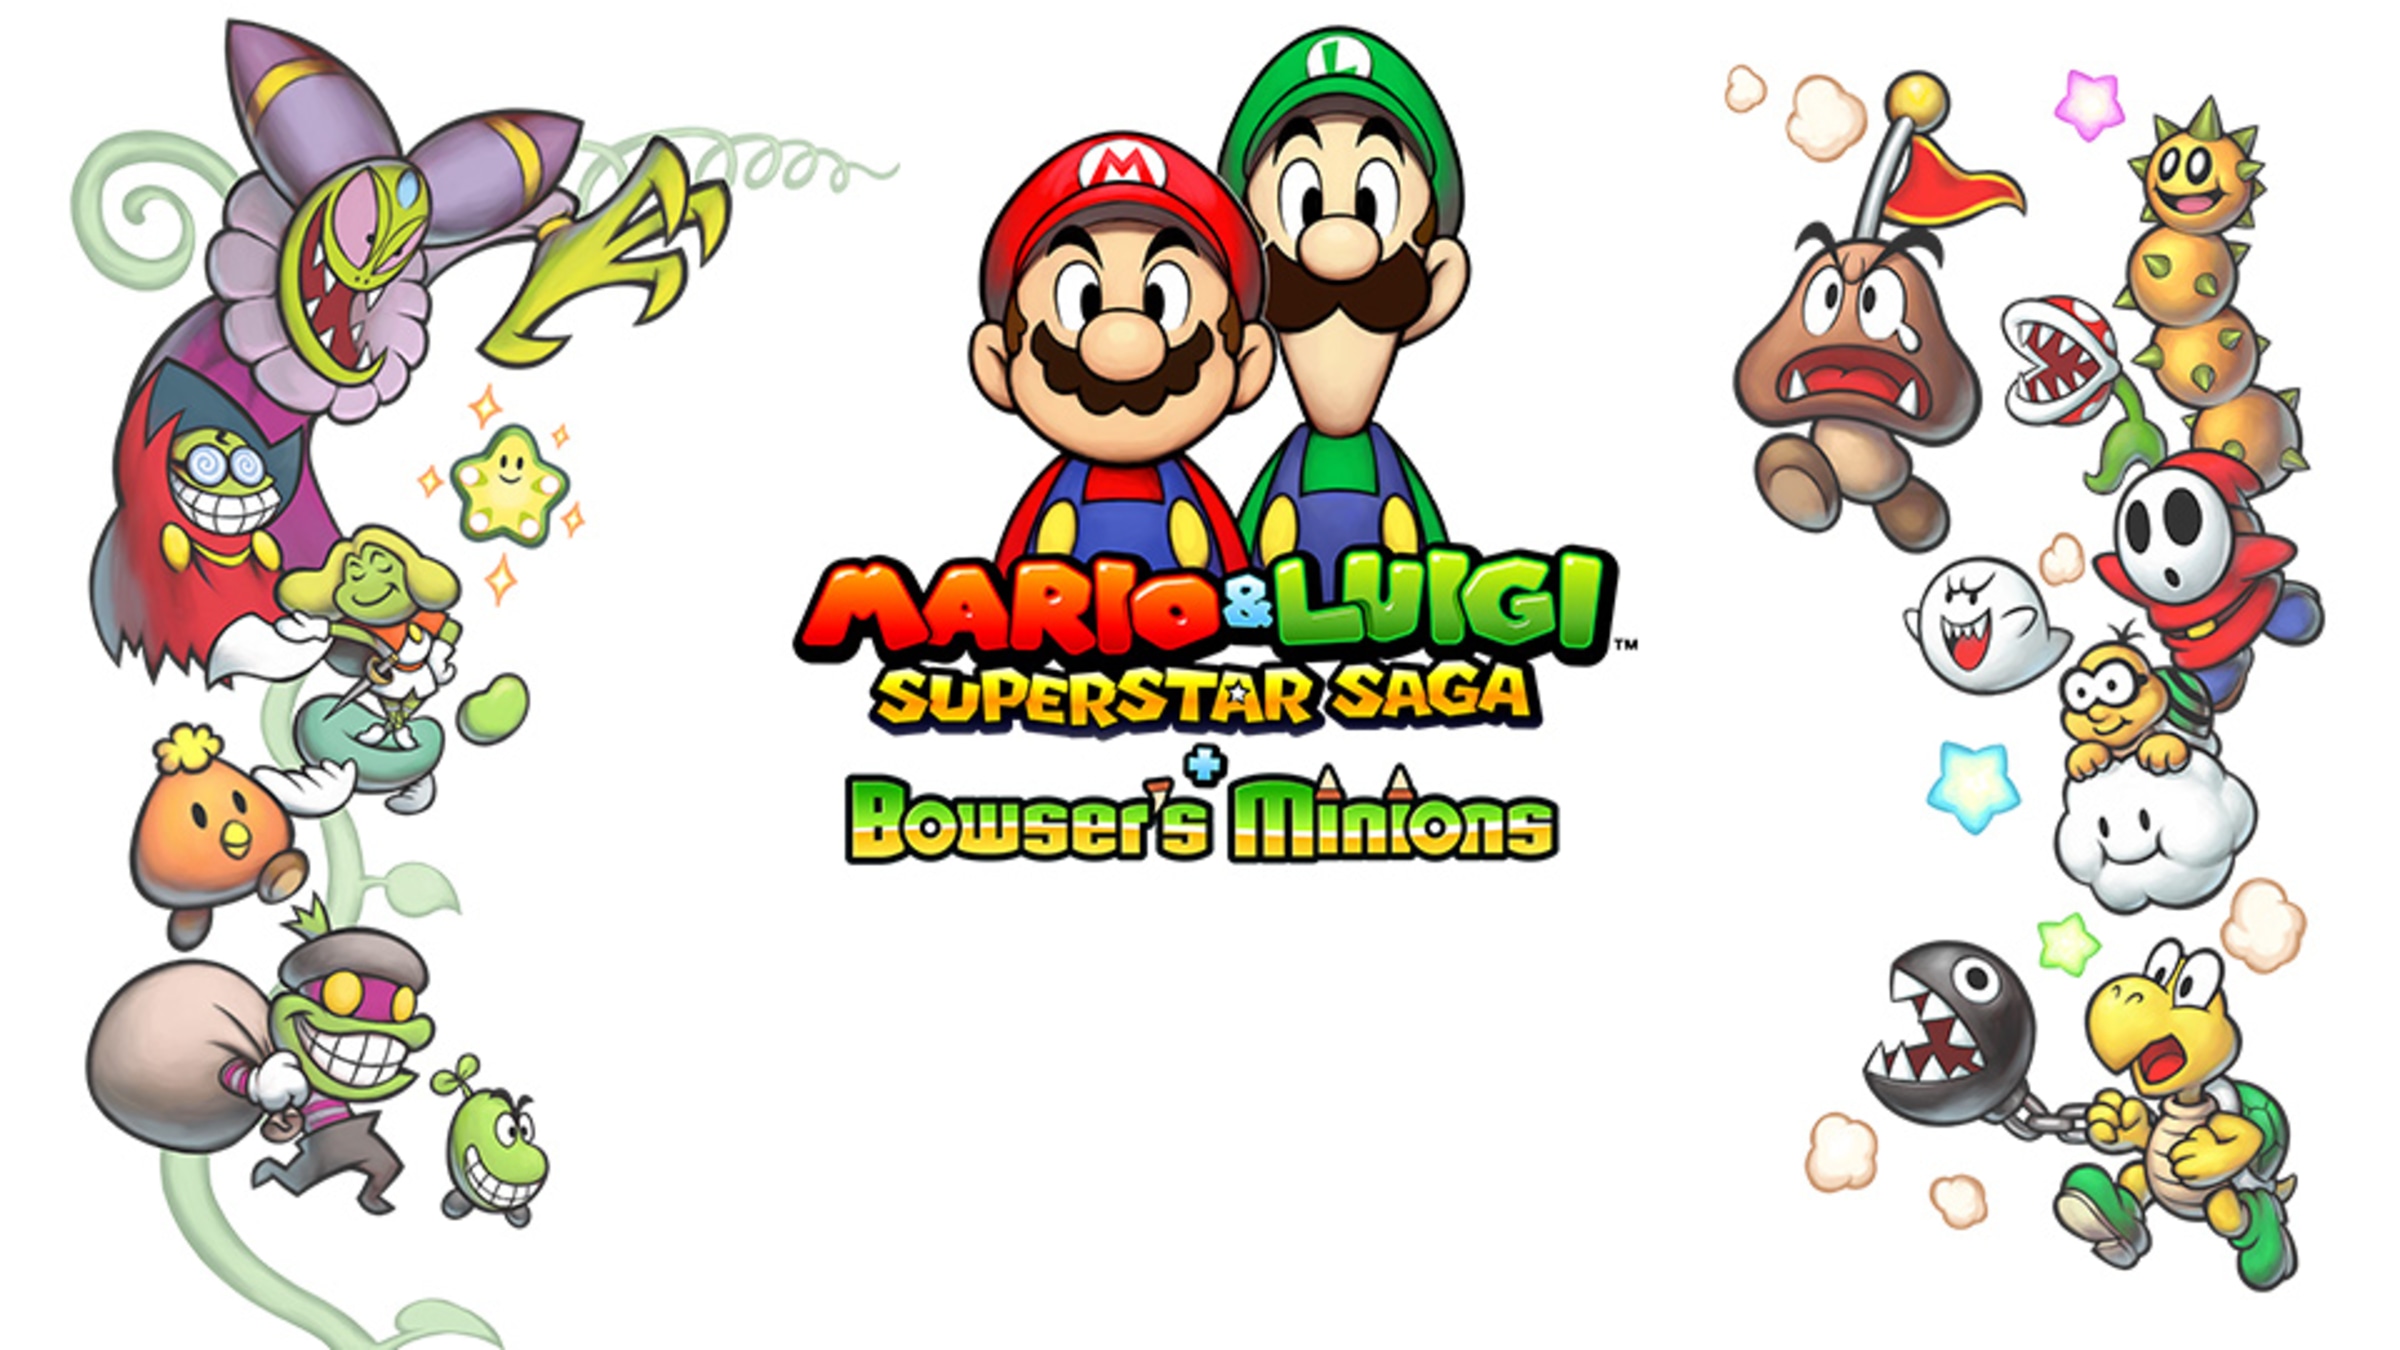 & Luigi: Superstar Saga + Minions for Nintendo 3DS - Nintendo Official